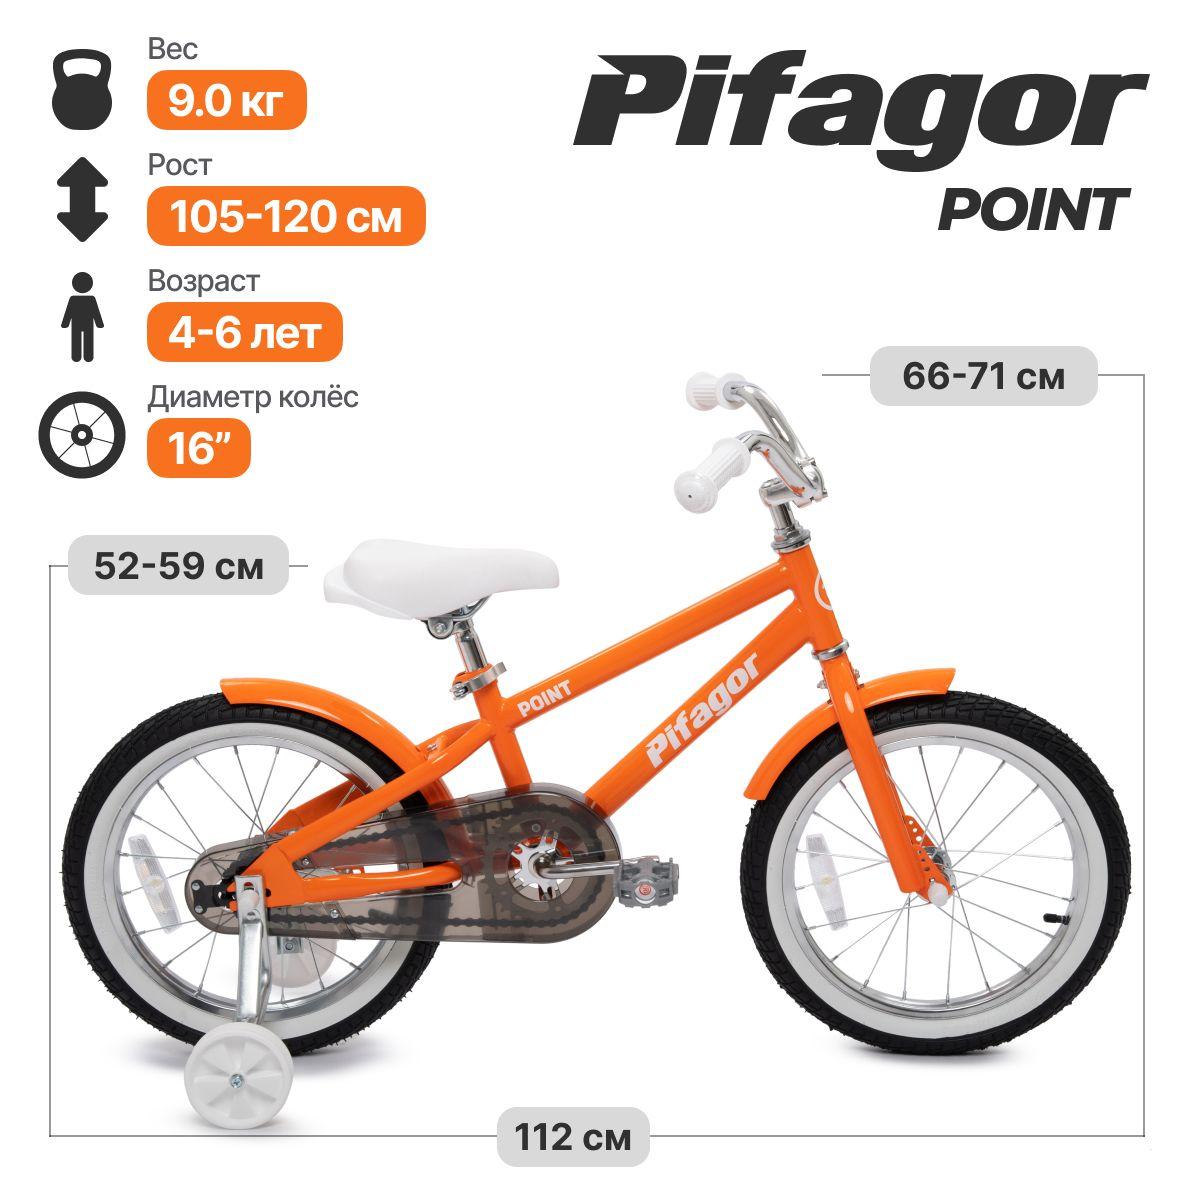 Велосипед Pifagor Point 16